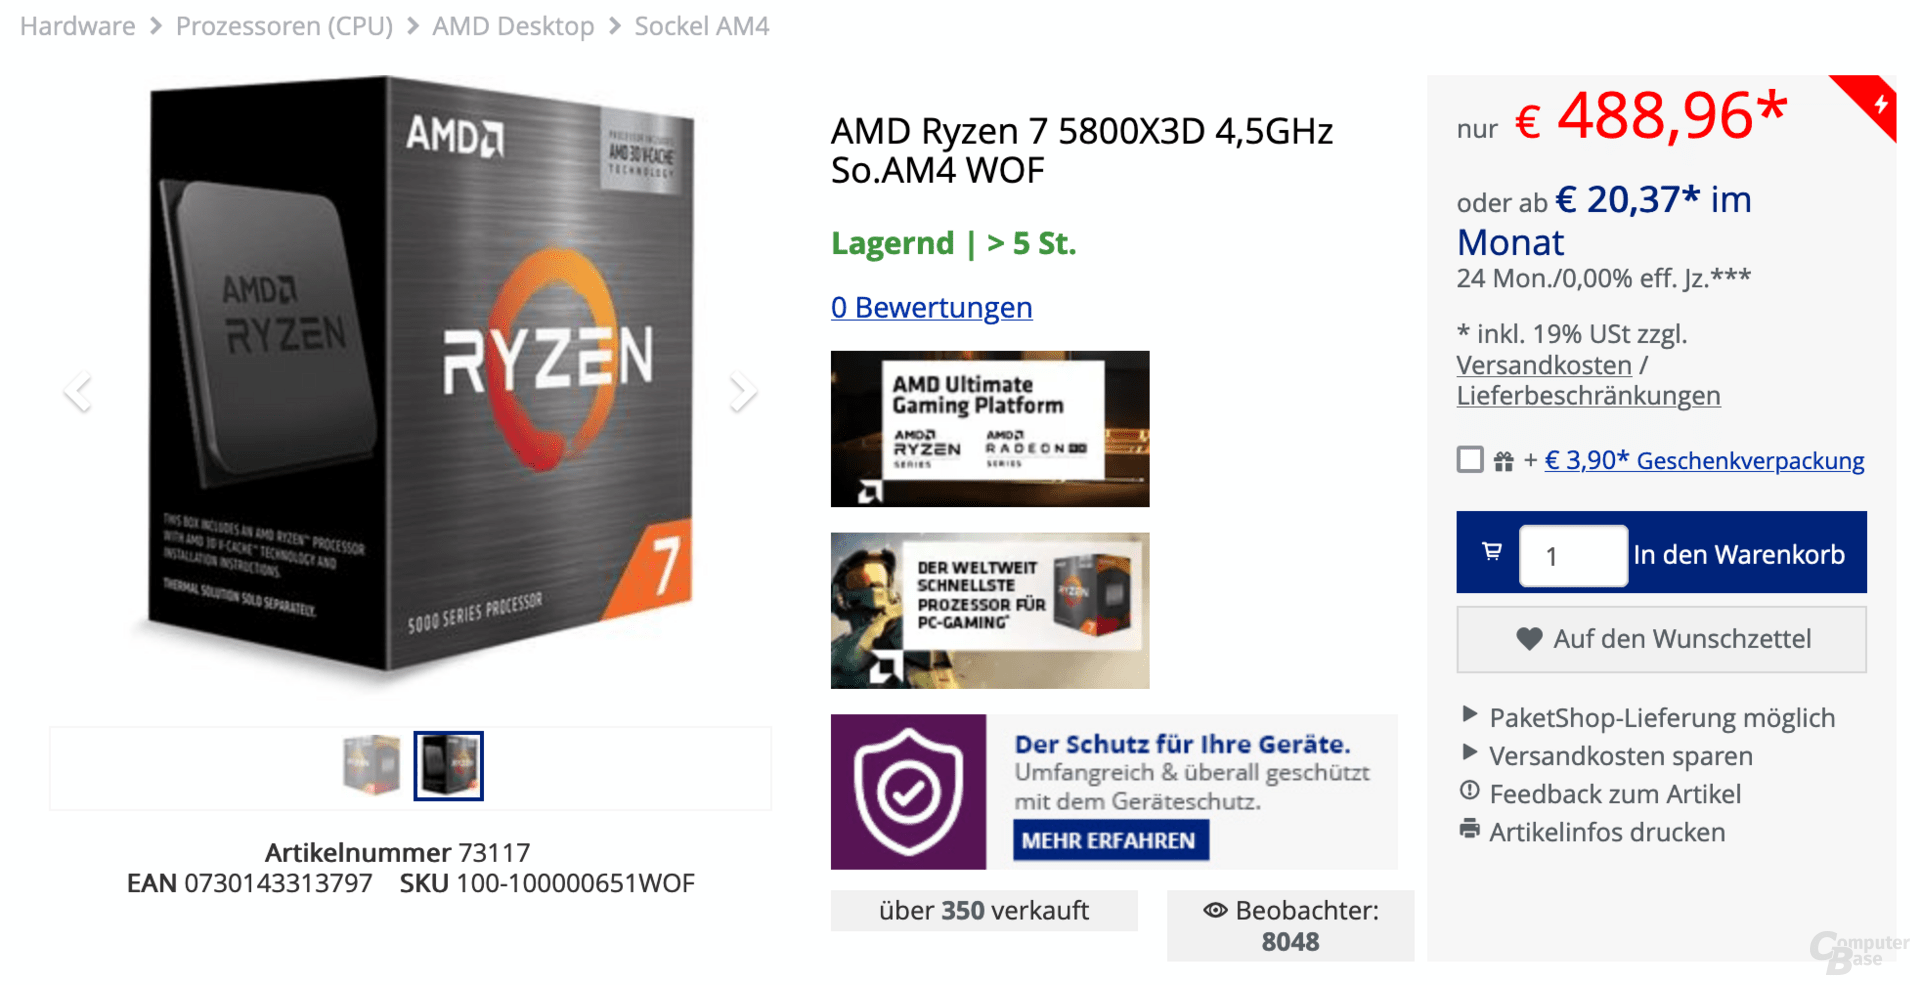 AMD Ryzen 7 5800X3D verfügbar ab Lager am Morgen des 21. April um 8:20 Uhr